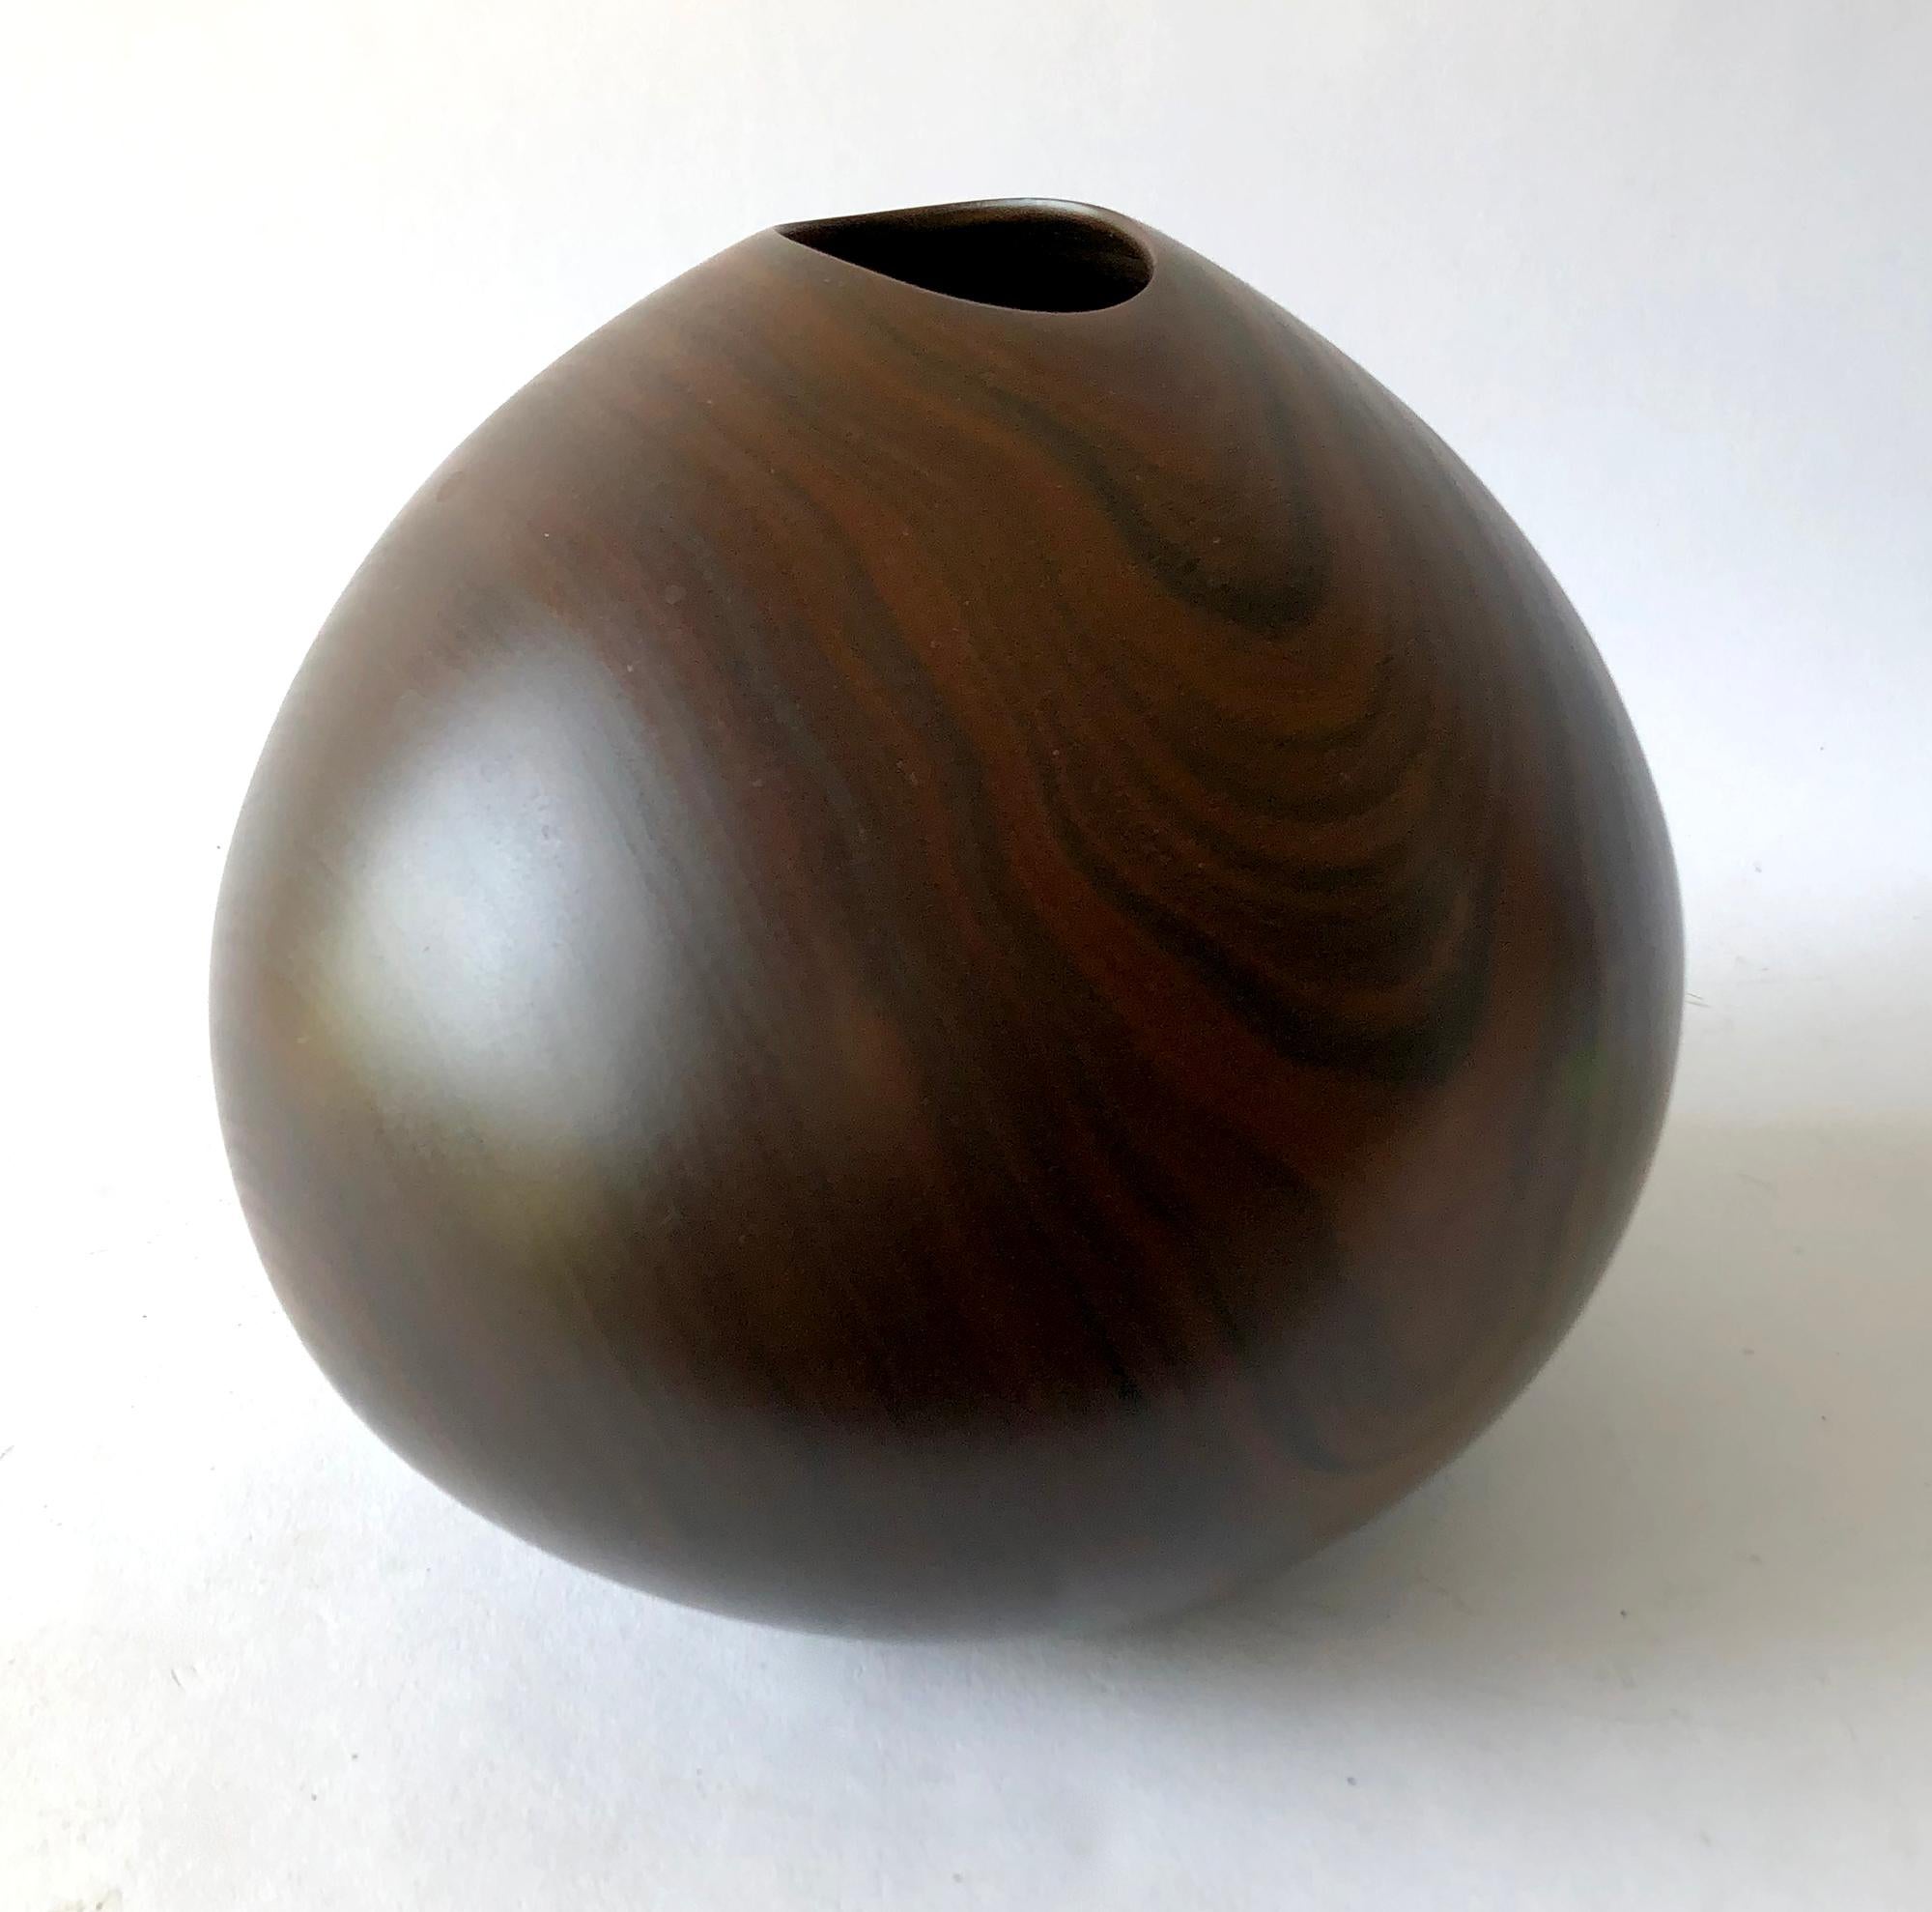 Vera wood vase created by Dan Kvitka of Portland, Oregon, circa 1980s. Vase measures 7